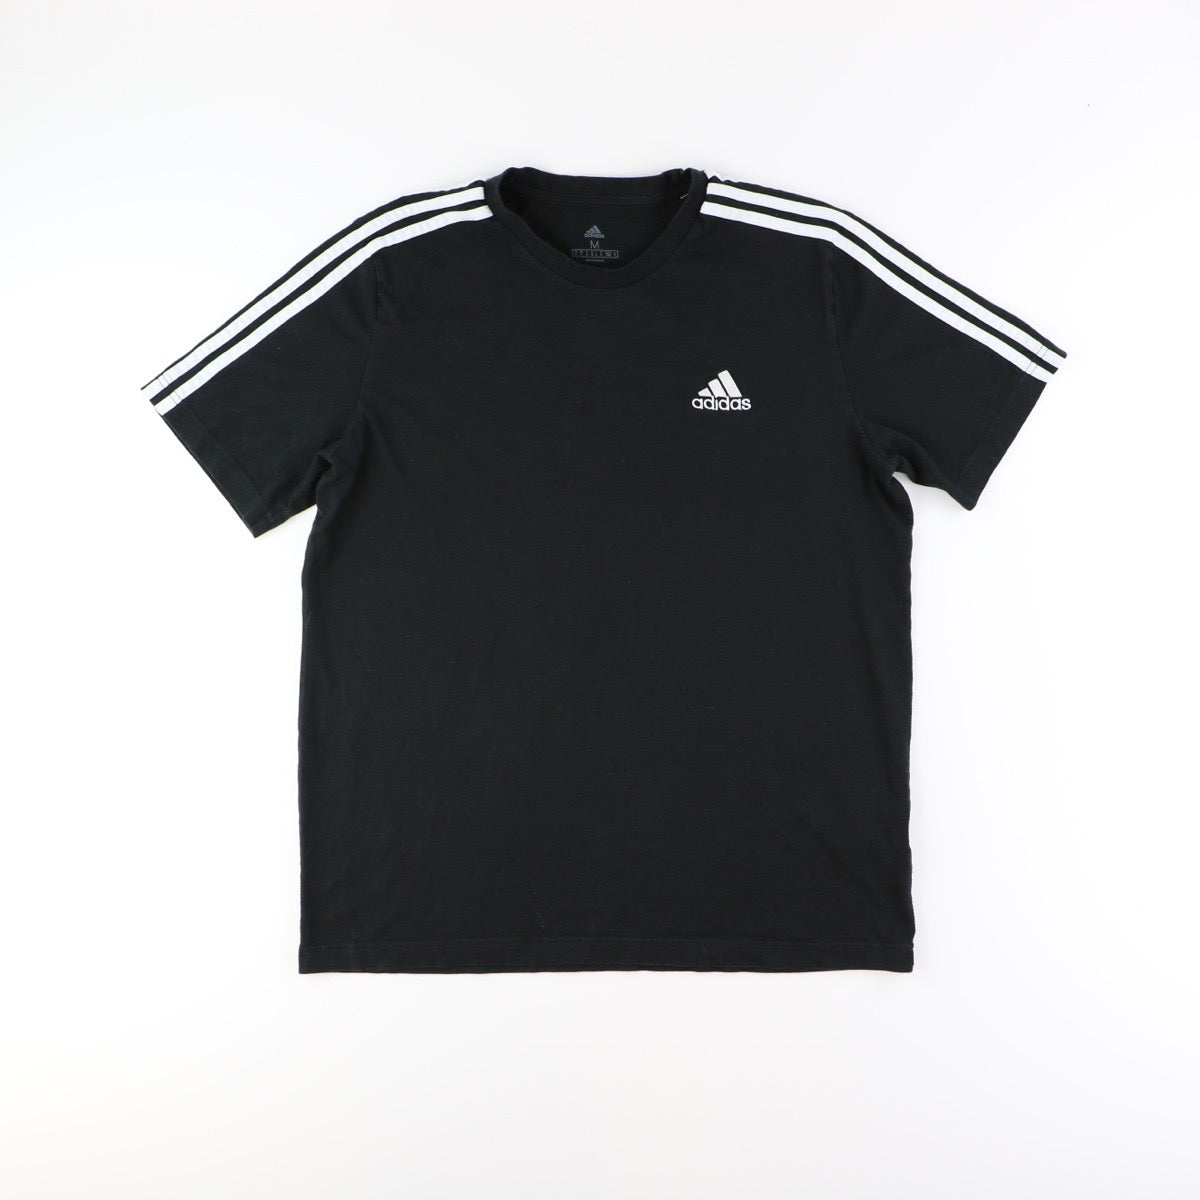 Adidas T-shirt (M)